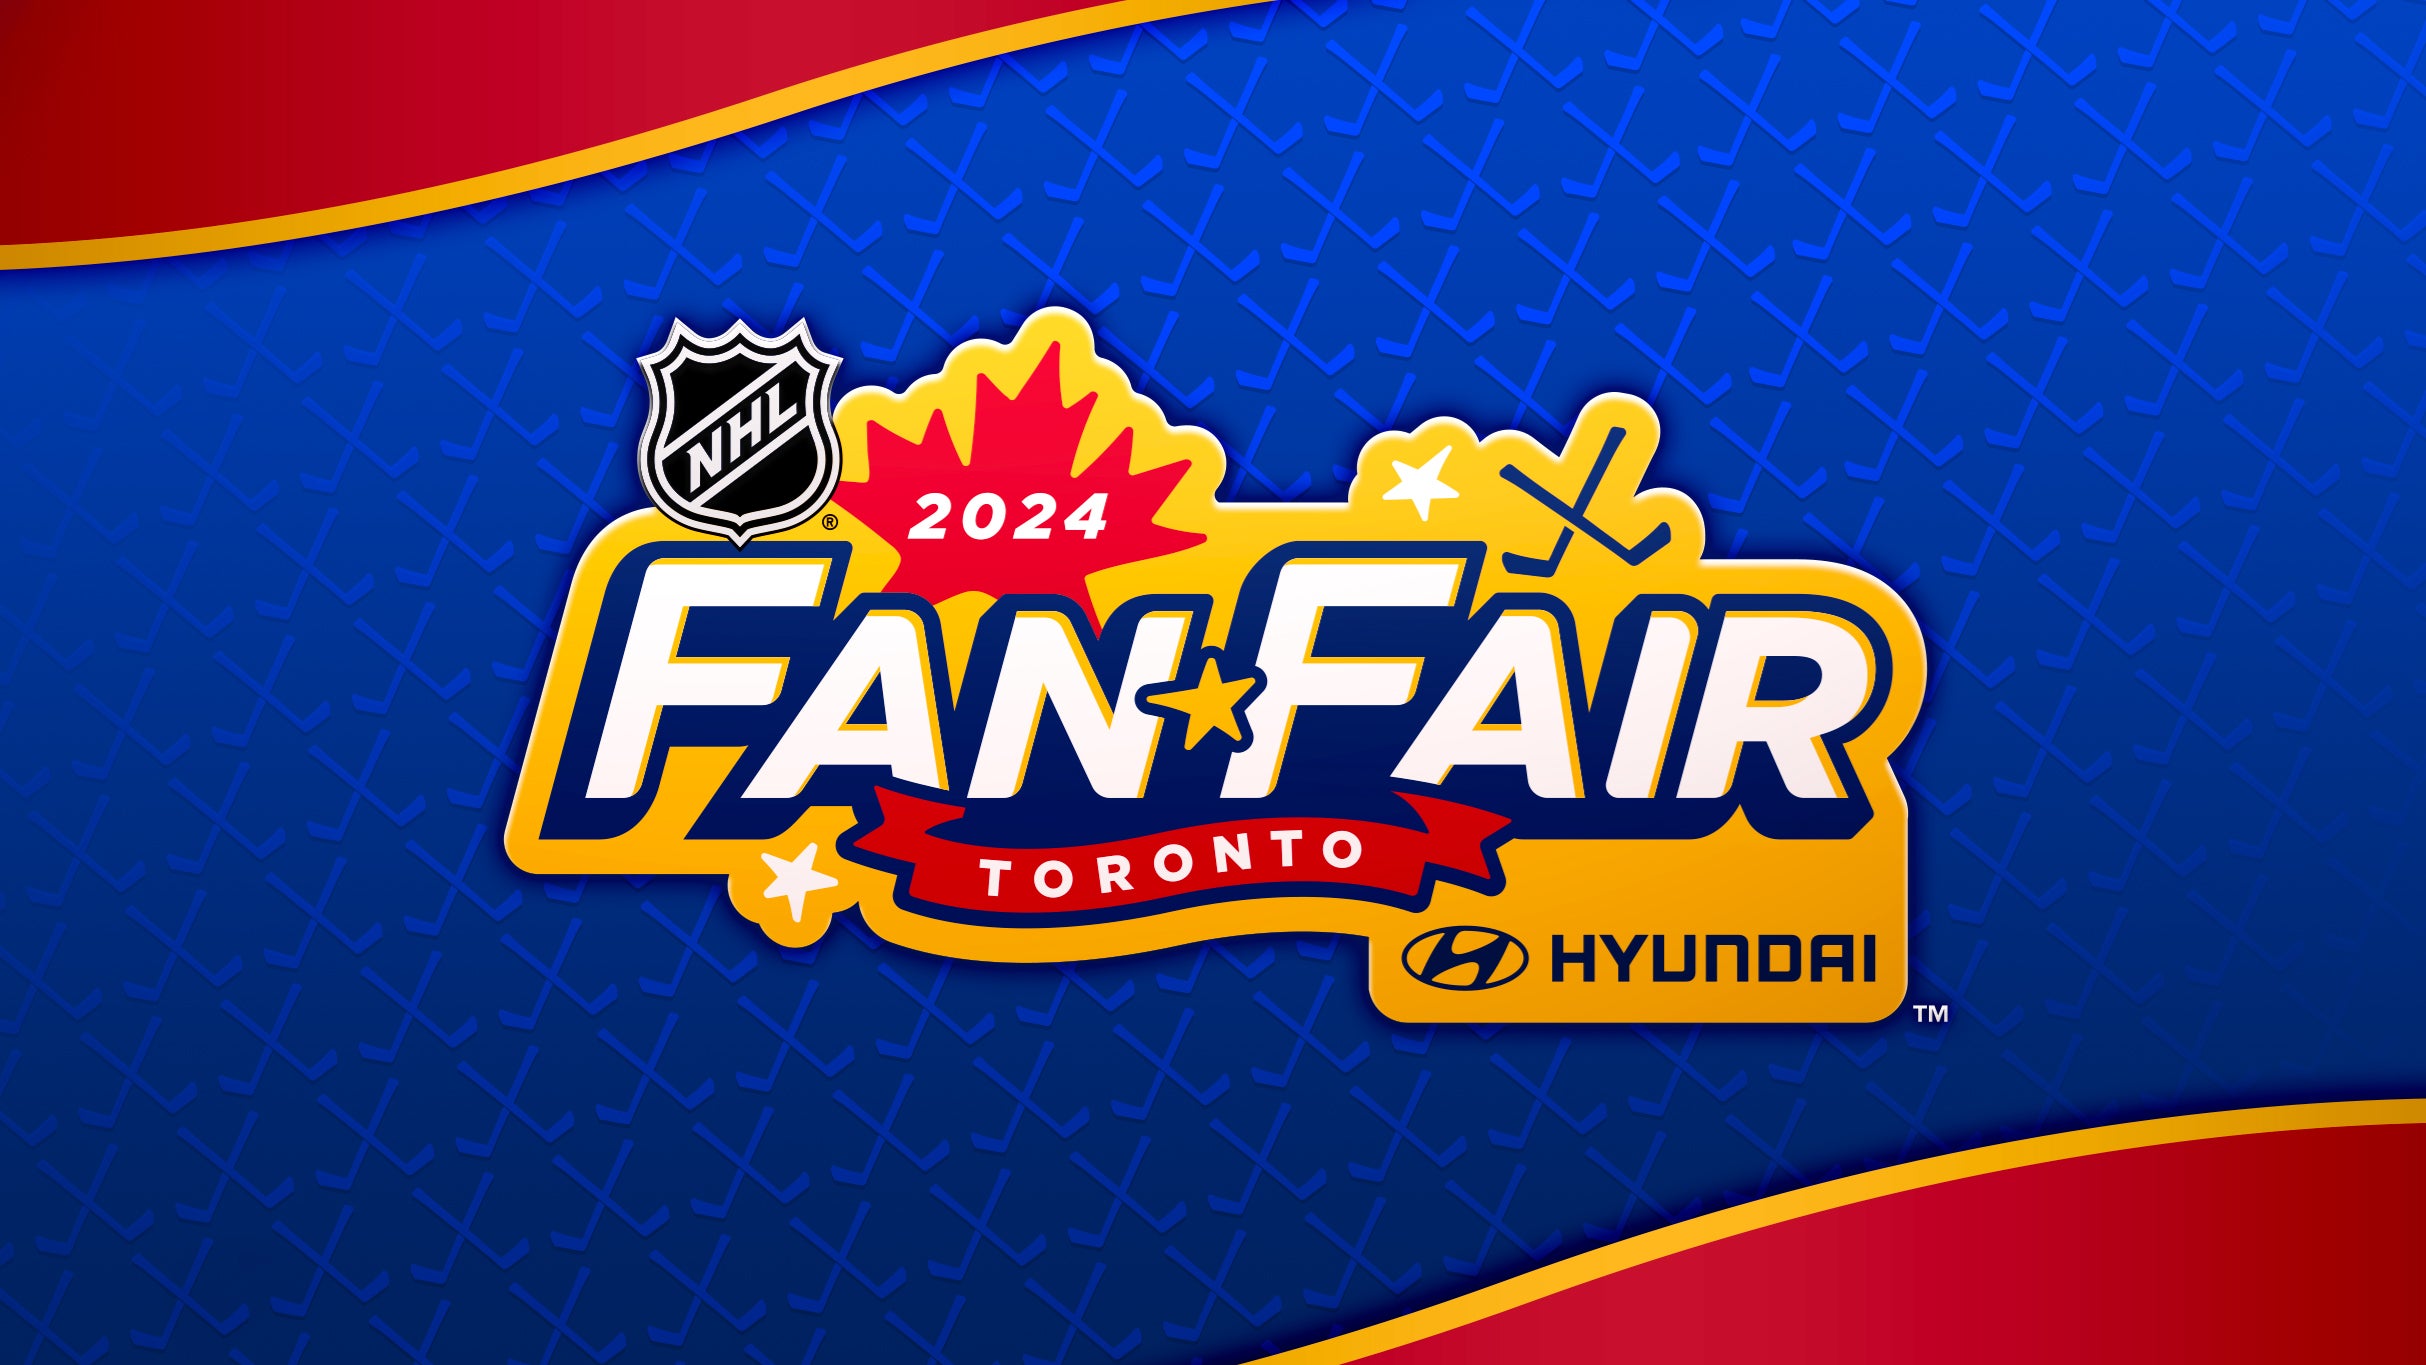 2024 Hyundai NHL Fan Fair - Friday 1:00 PM - 10:00 PM in Toronto promo photo for Metrolinx presale offer code